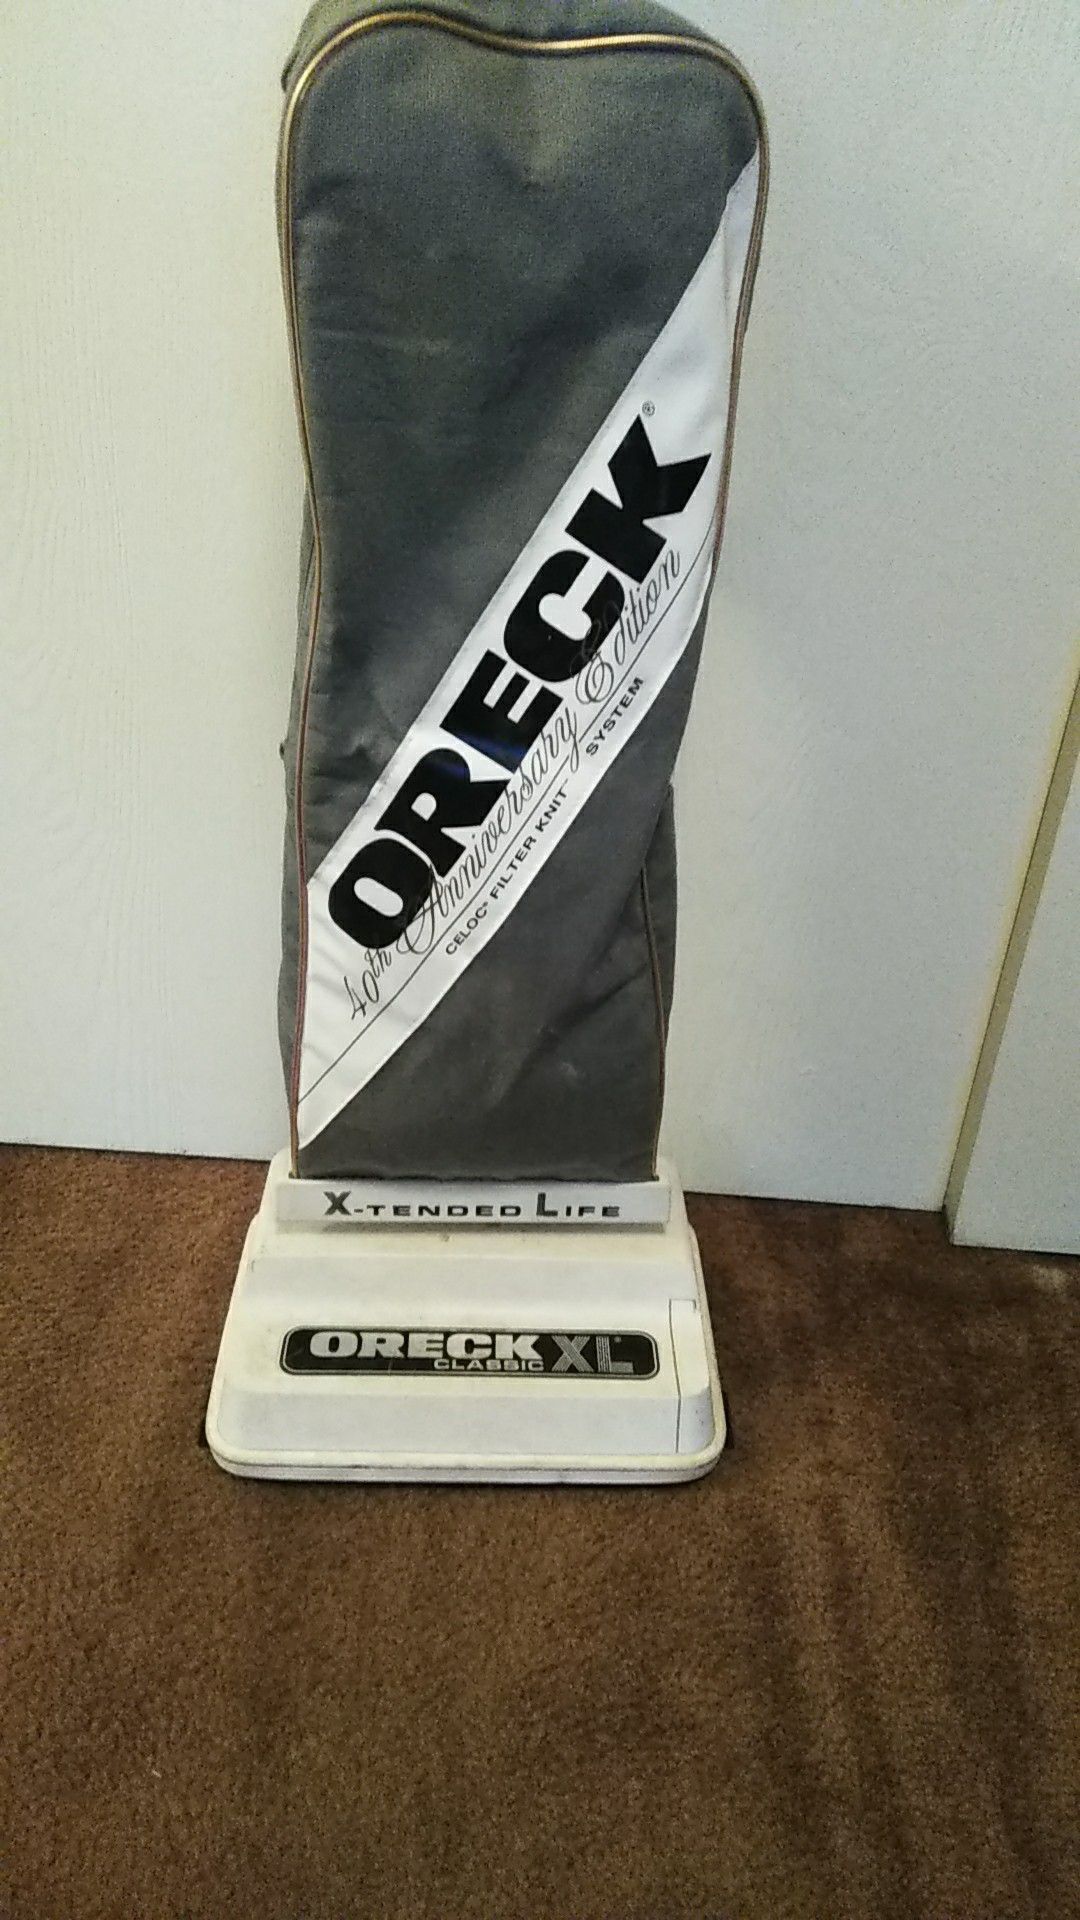 Oreck XL upright vacuum cleaner #XL2330HS